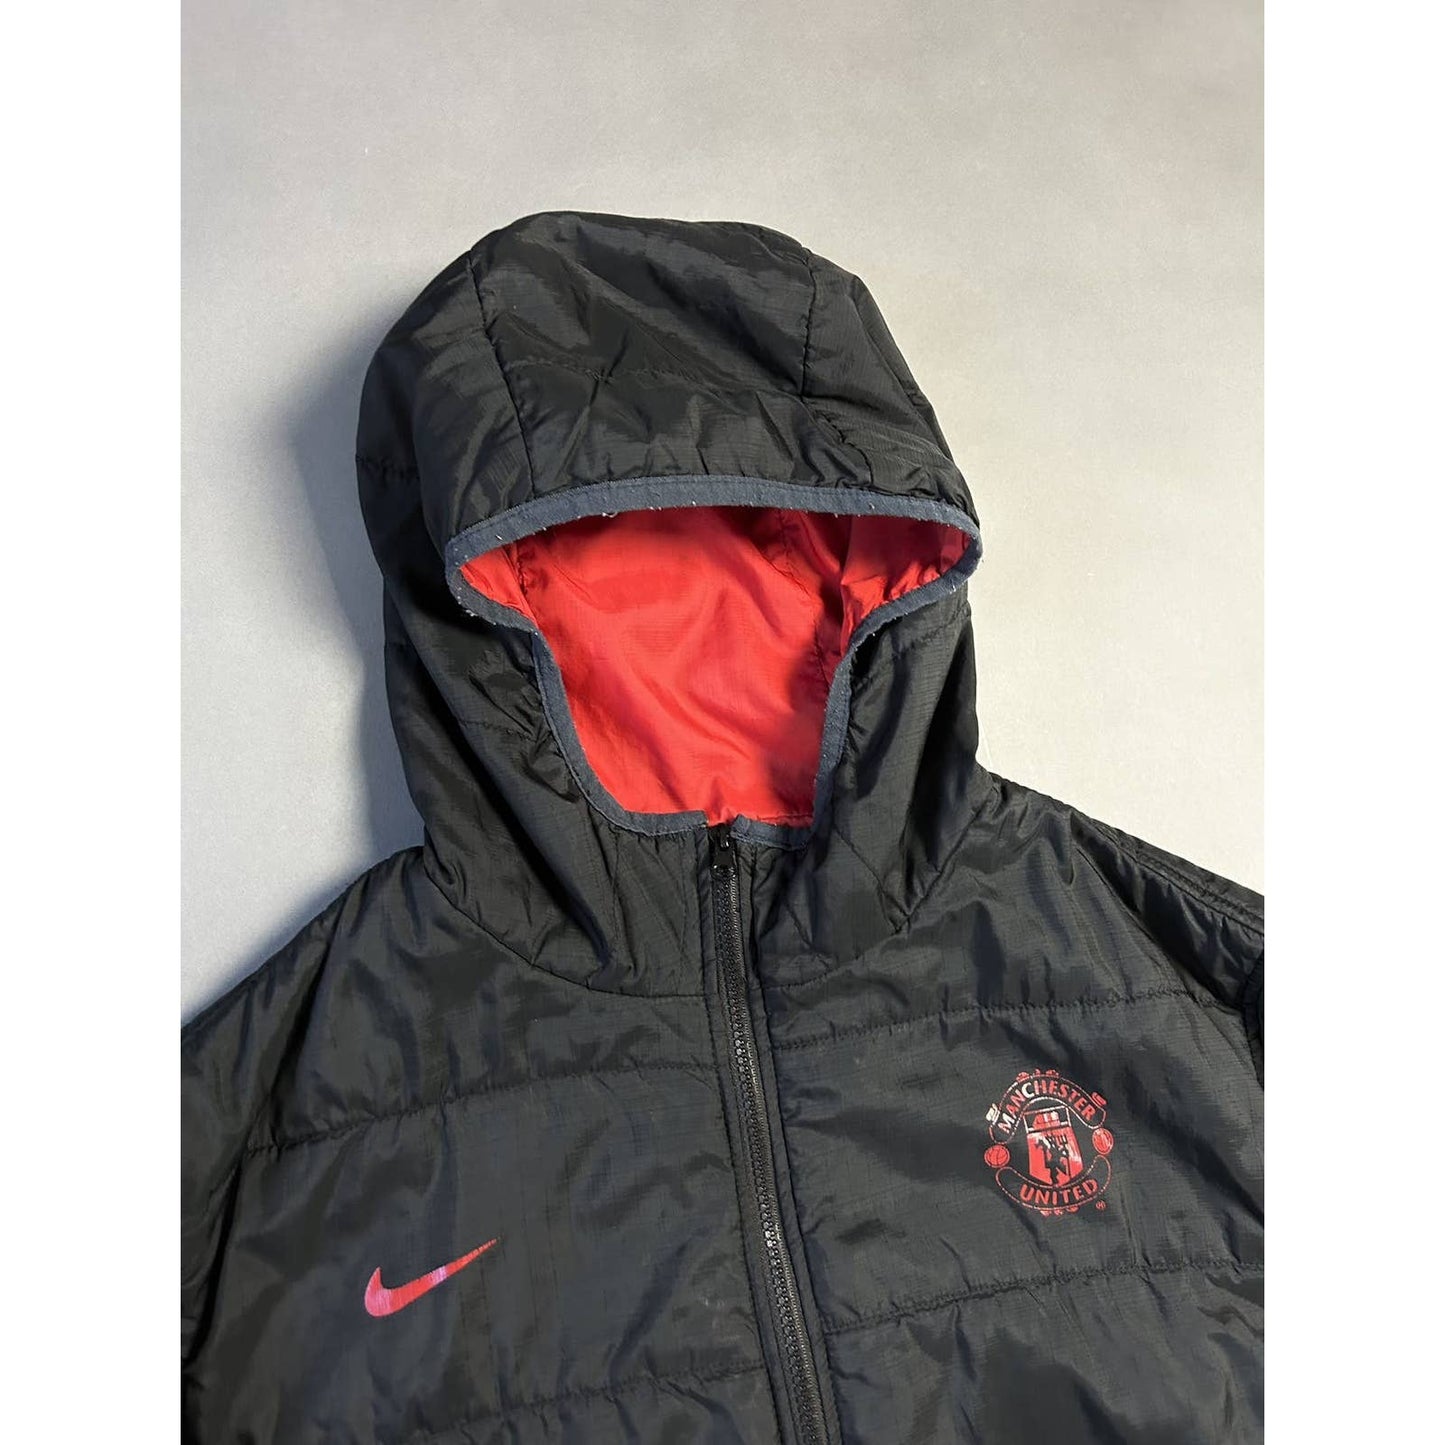 Man United Nike vintage reversible jacket black Manchester